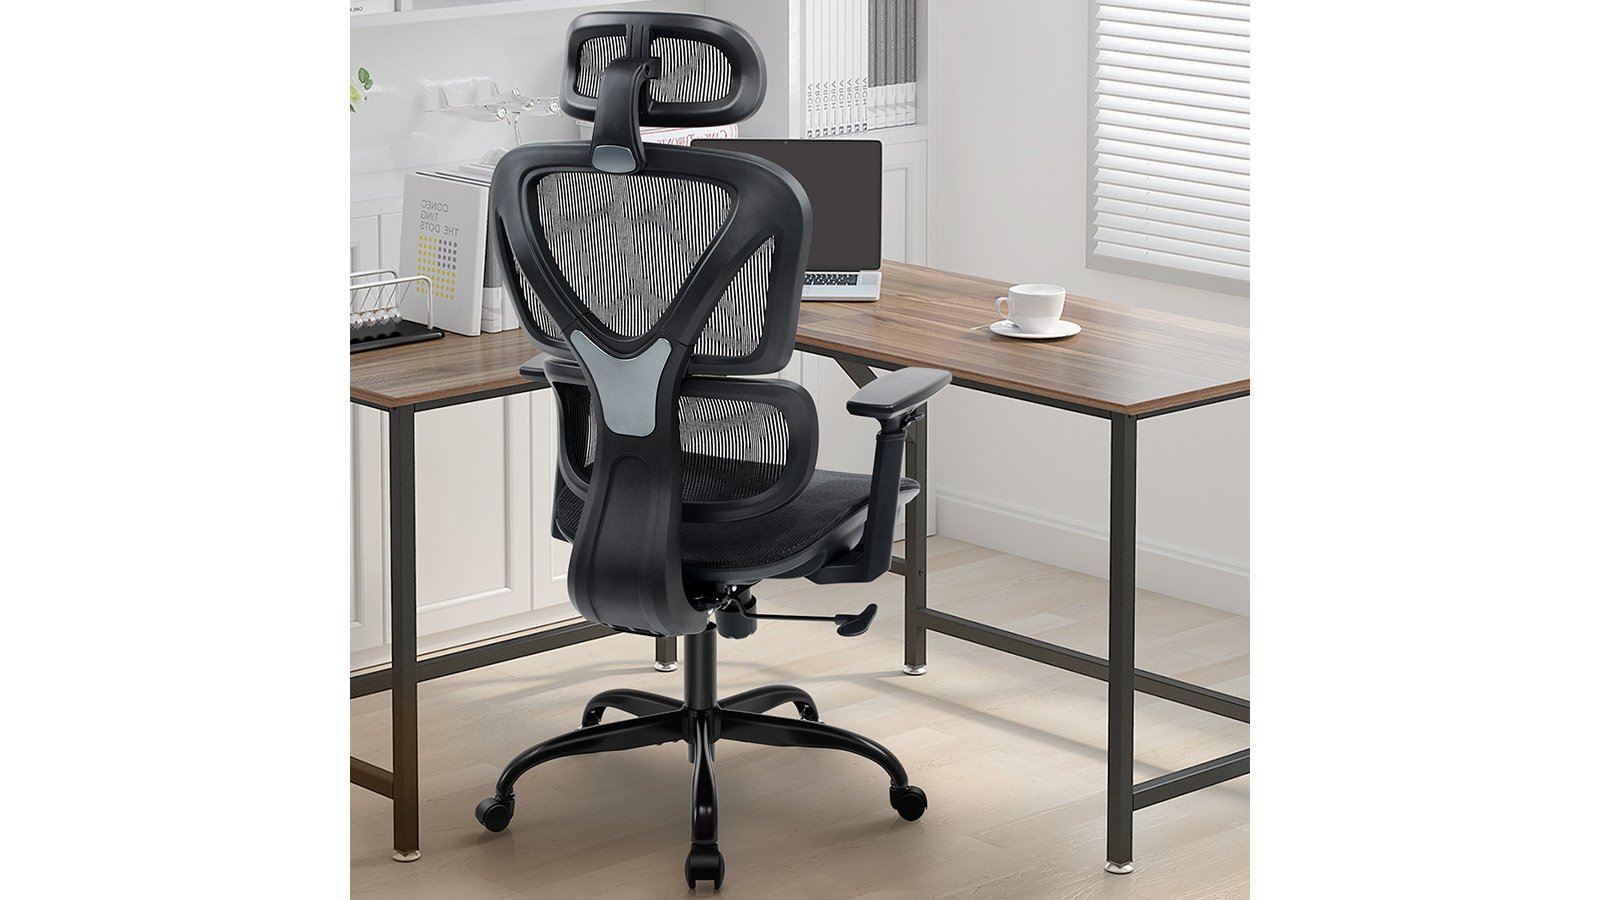 KERDOM Ergonomic Chair: Breathable Mesh Cushion